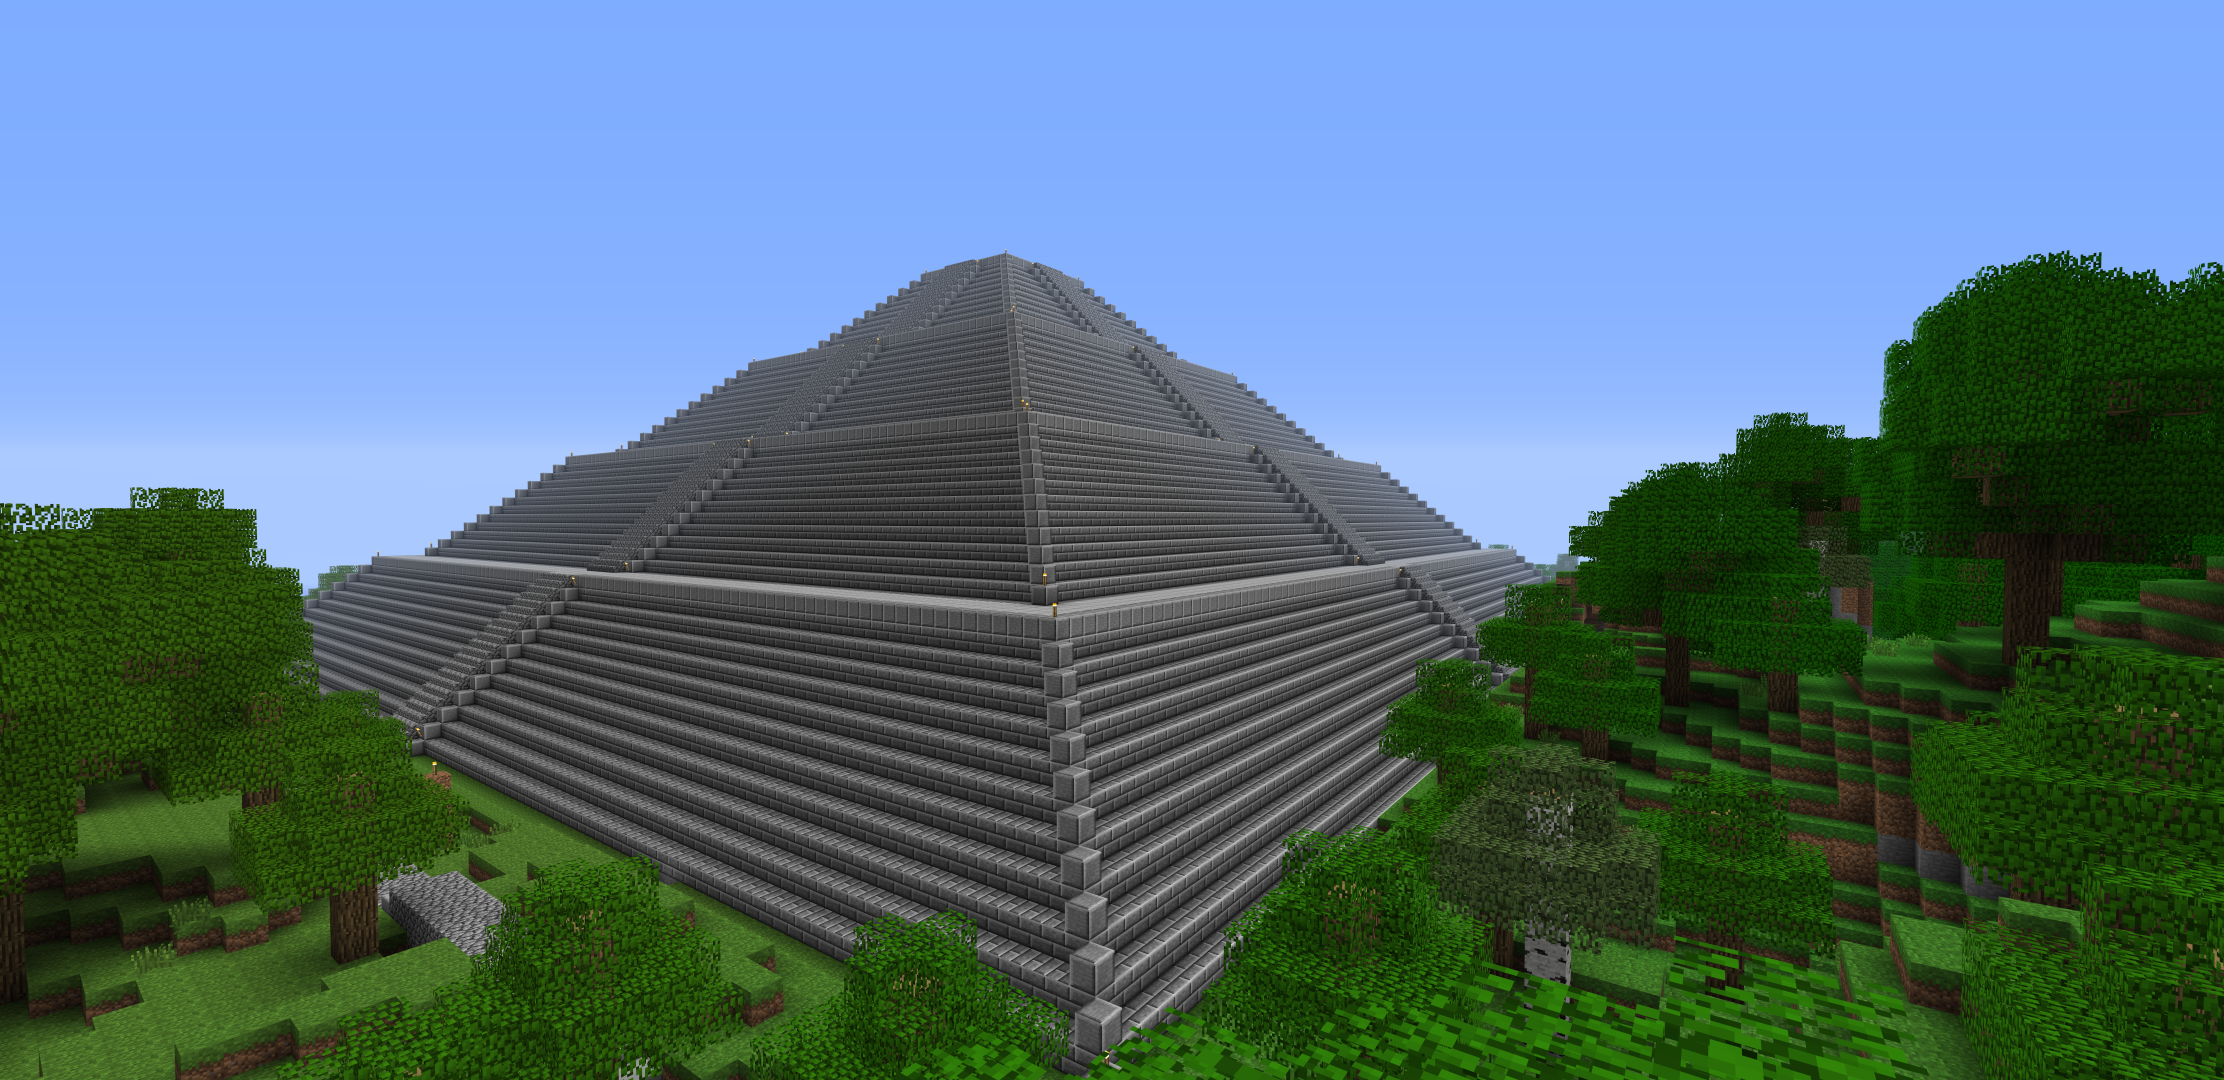 Stone brick pyramid